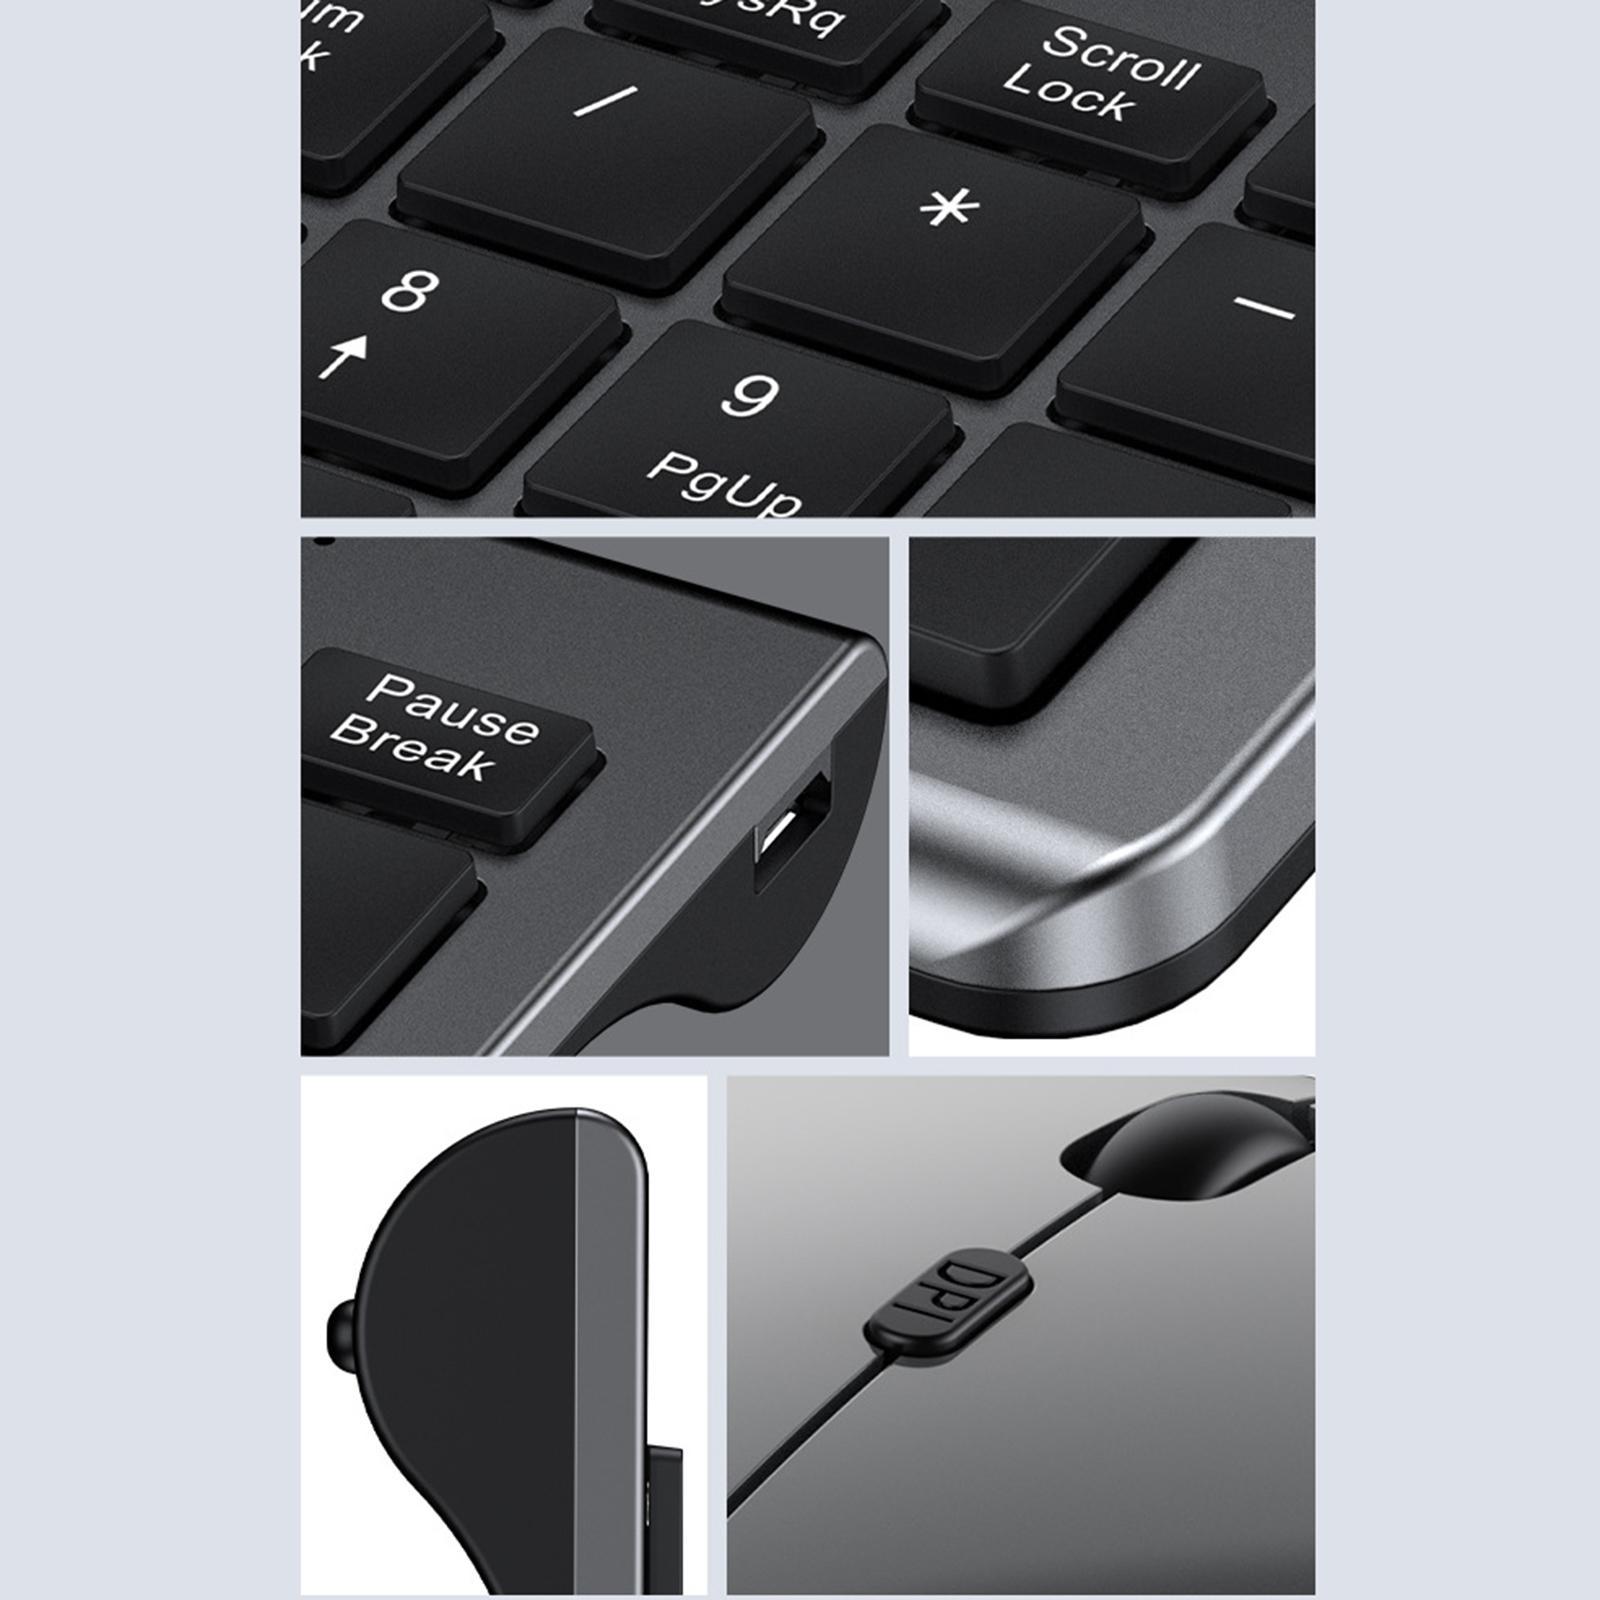 Silent Portable MIni Keyboard Universal Computer Gray